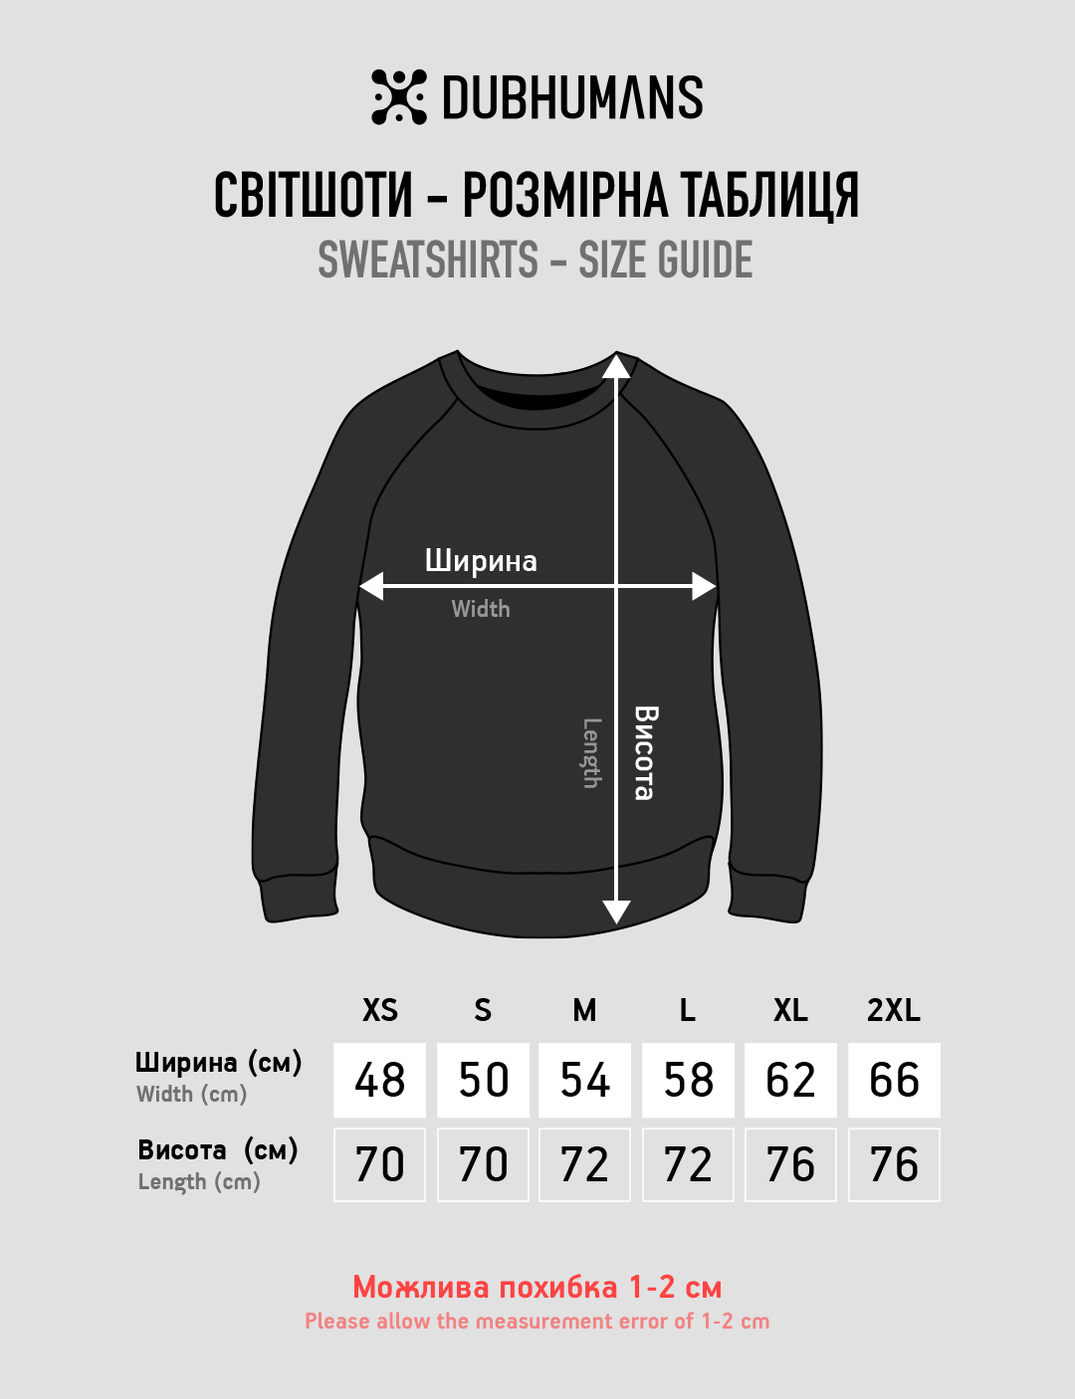 Men's Sweatshirt "Bavovna Time", Black, M